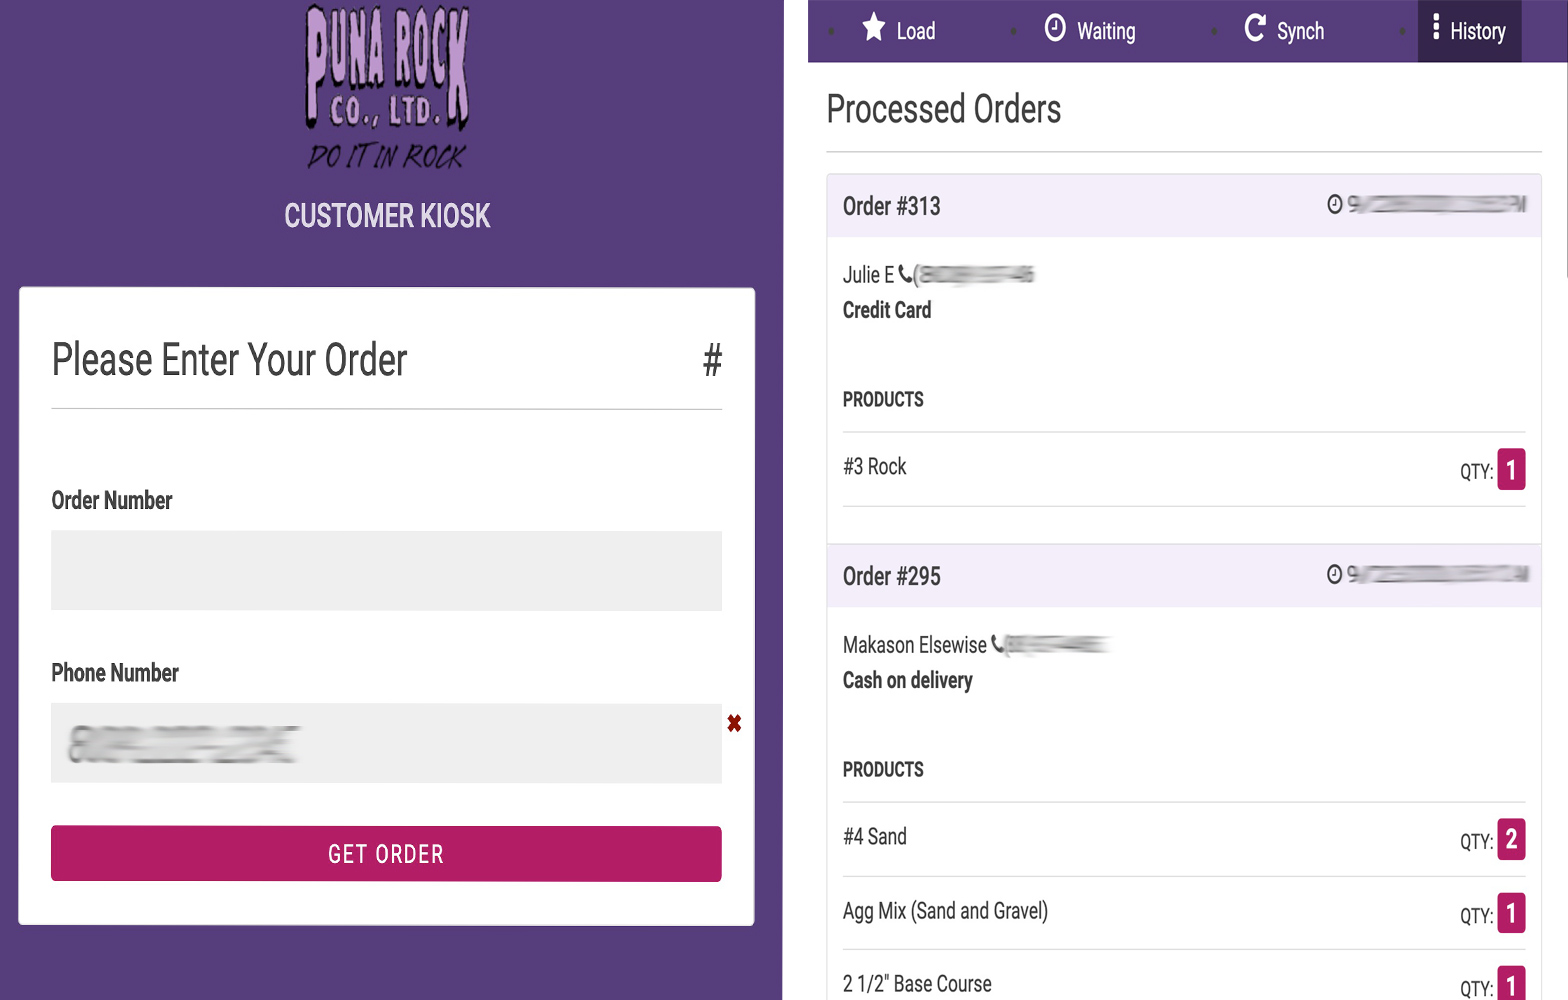 Puna Rock Customer Kiosk & Loading App